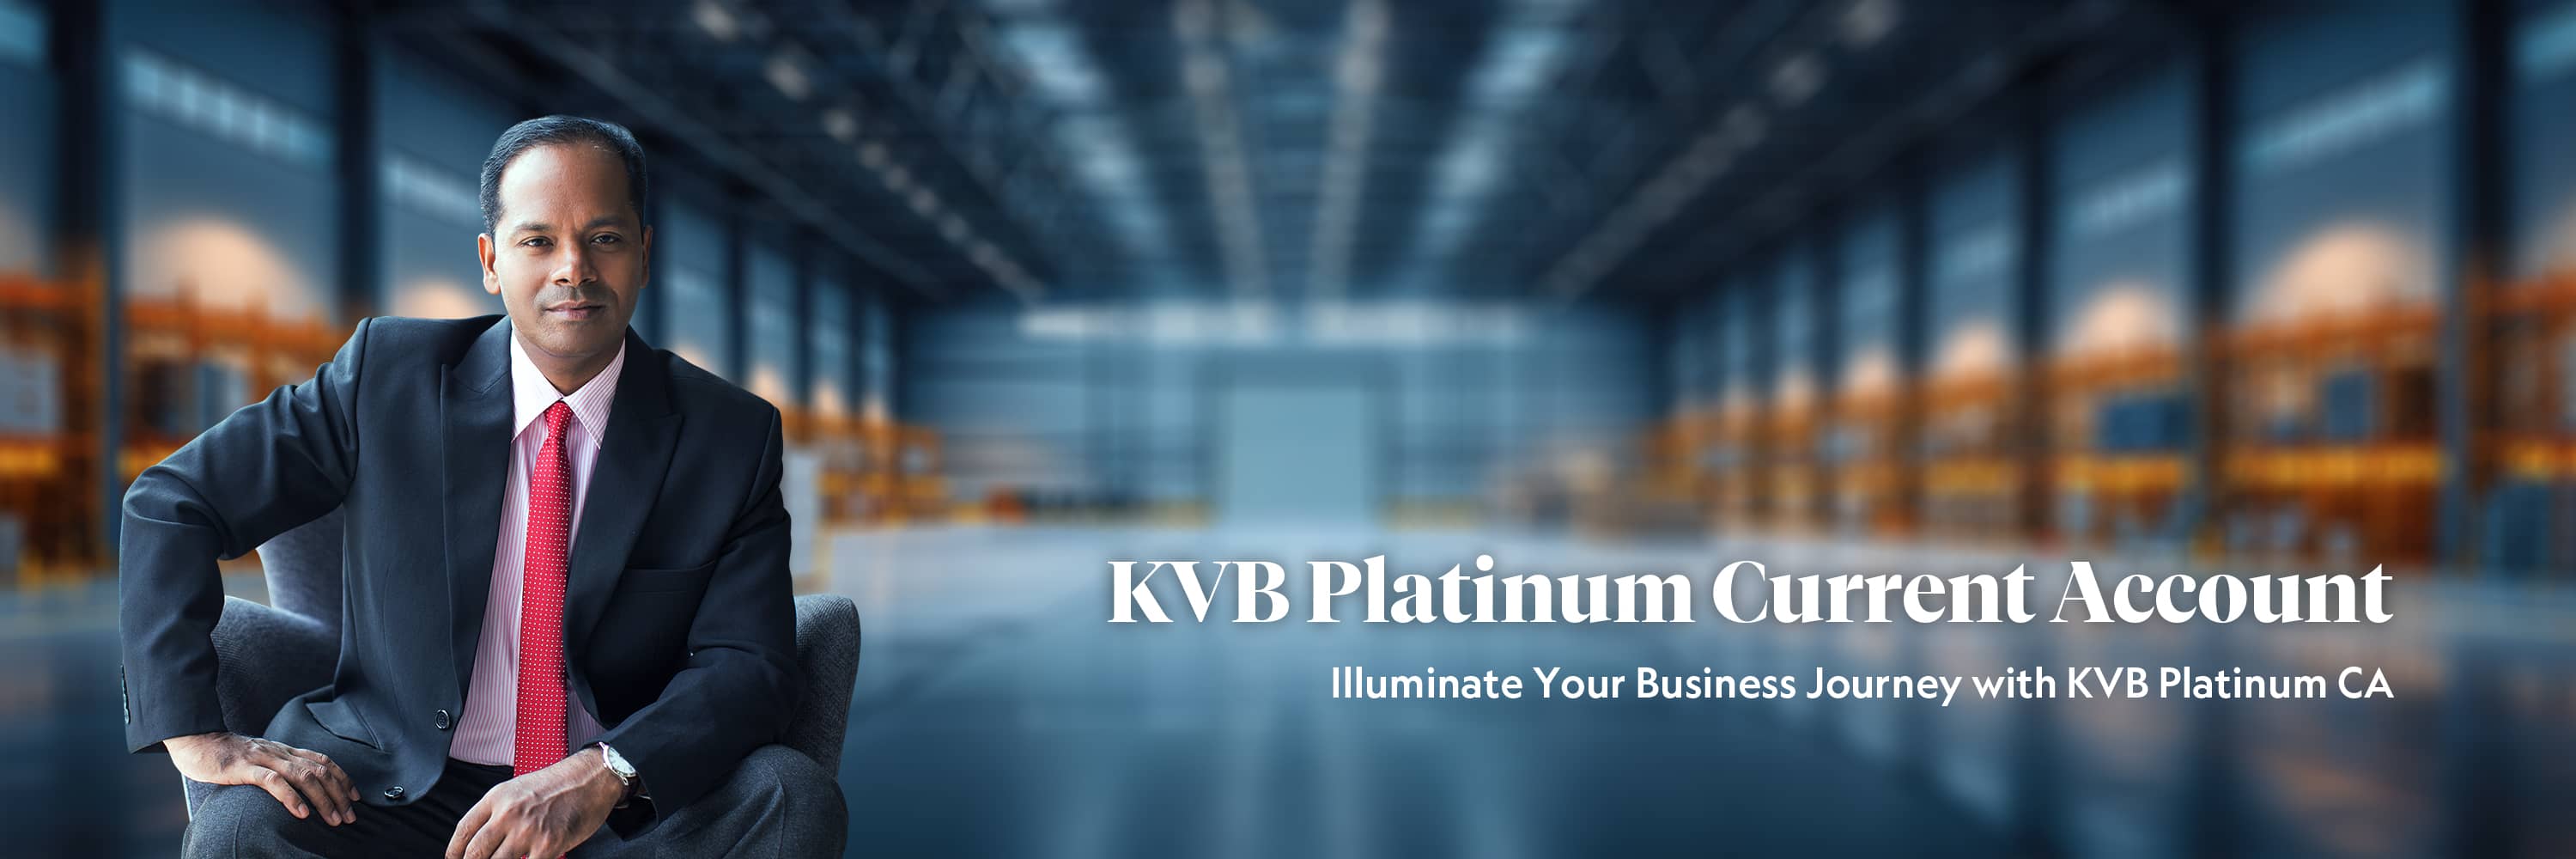 KVB Platinum Current Account